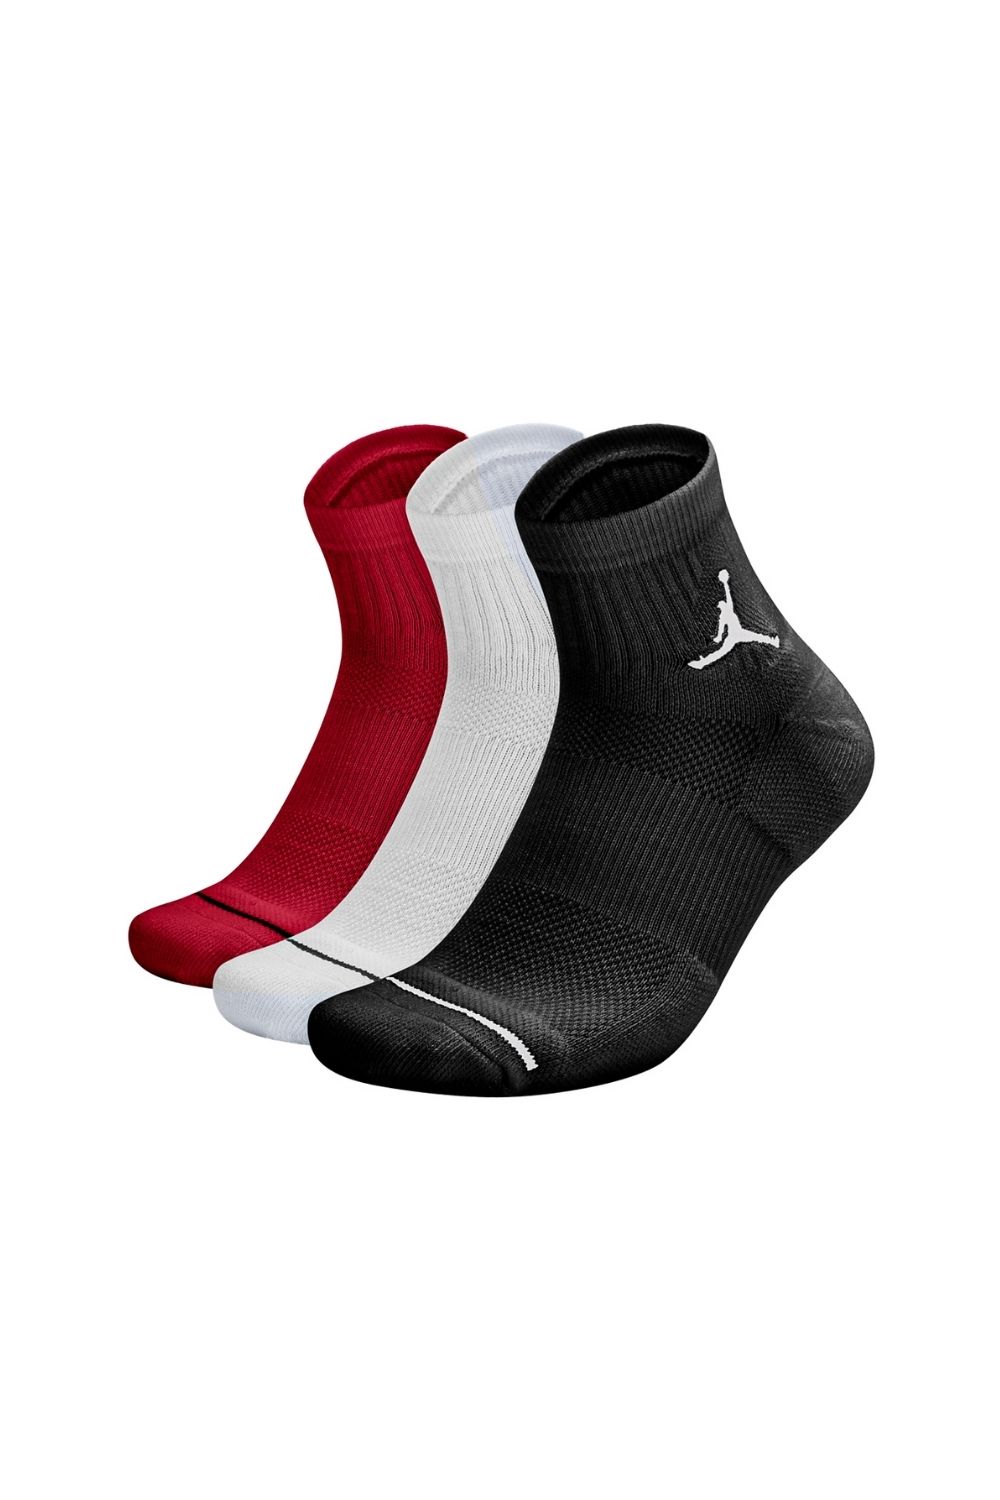 NIKE – Σετ κάλτσες JORDAN EVRY MAX ANKLE – 3PPK κόκκινες-λευκές-μαύρες 1514212.1-7191